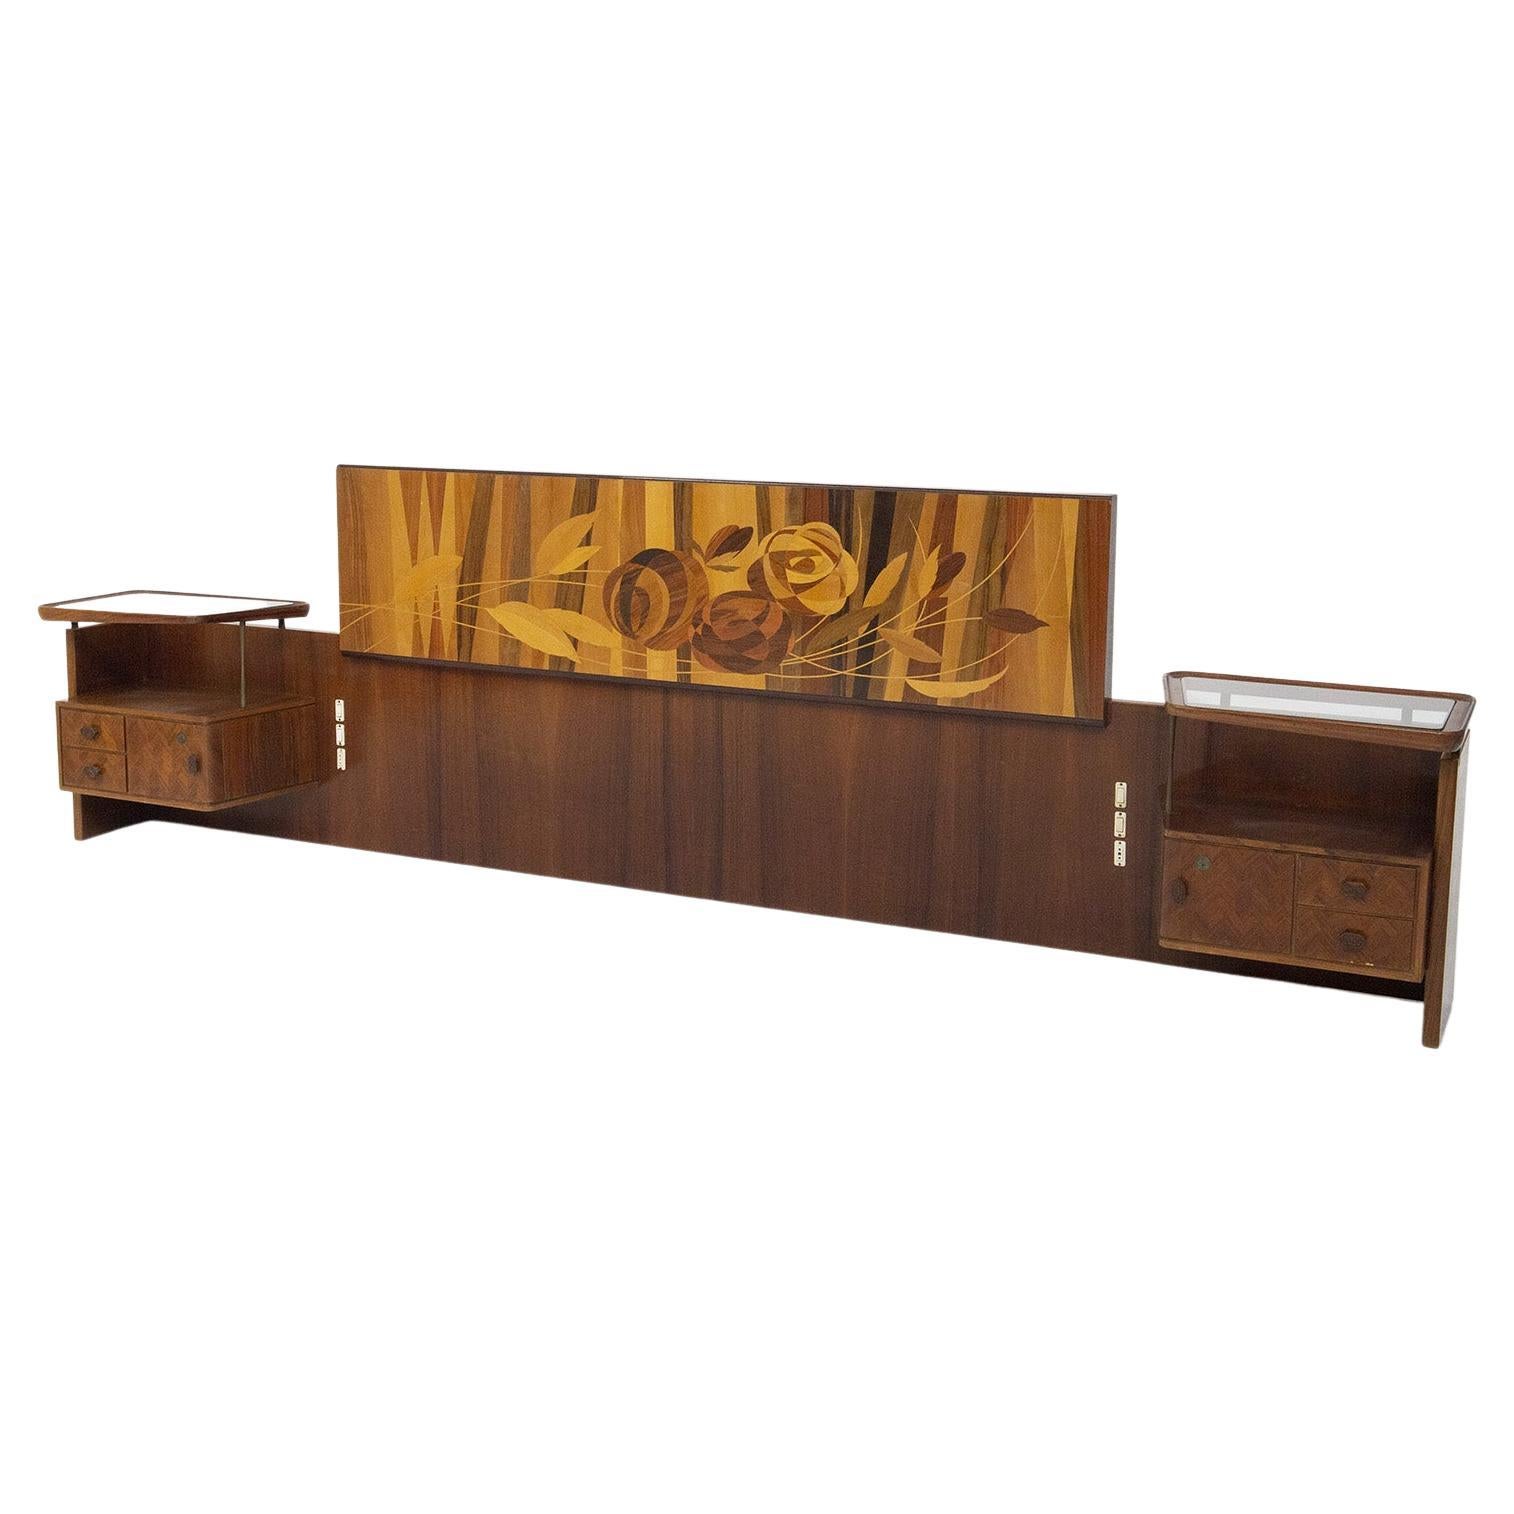 Luigi Scremin King Bed Headboard in Wood, Original Label For Sale